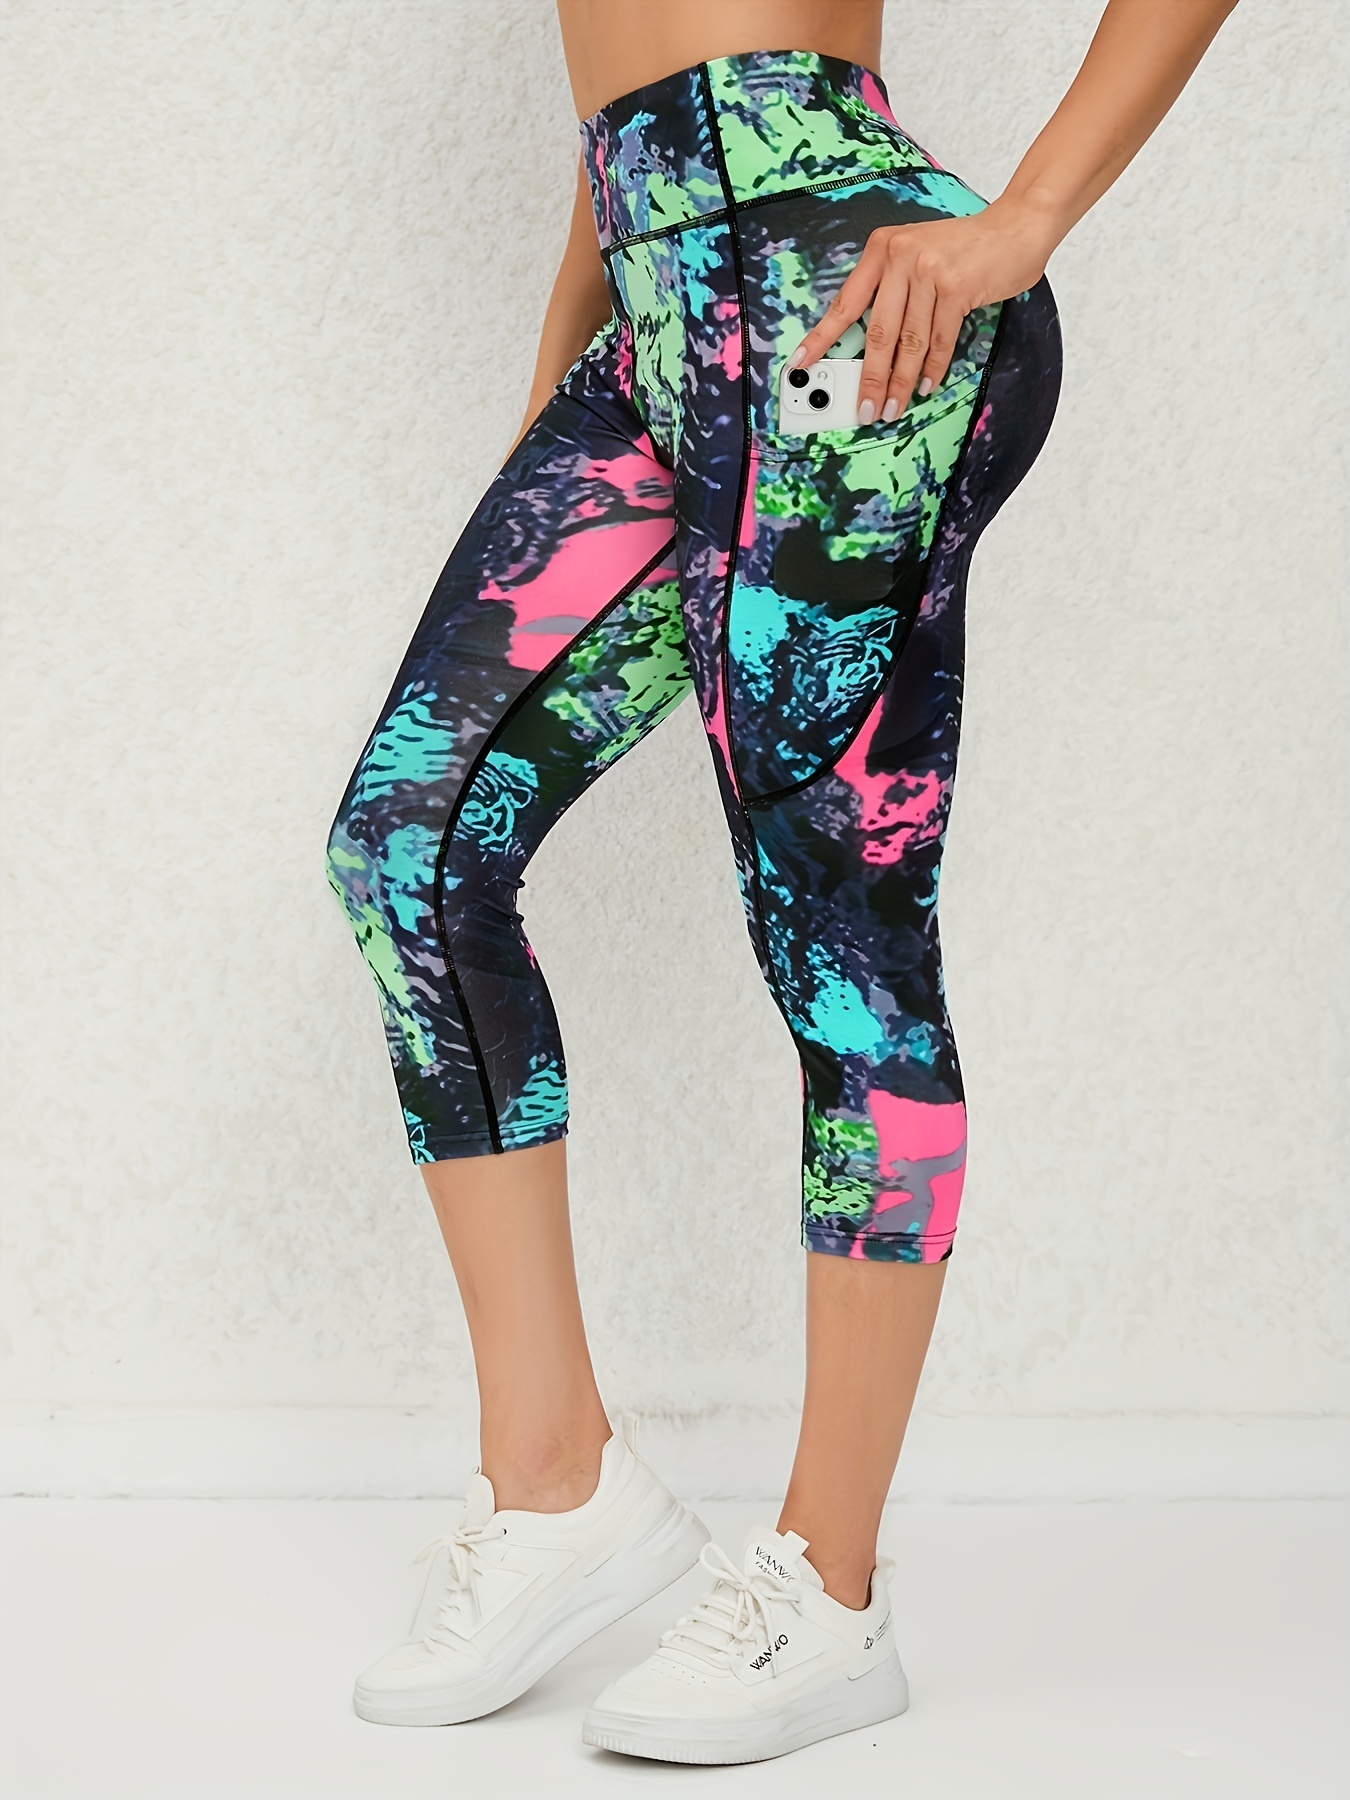 High Waisted Yoga Pants for Women- Printed Capris Leggings